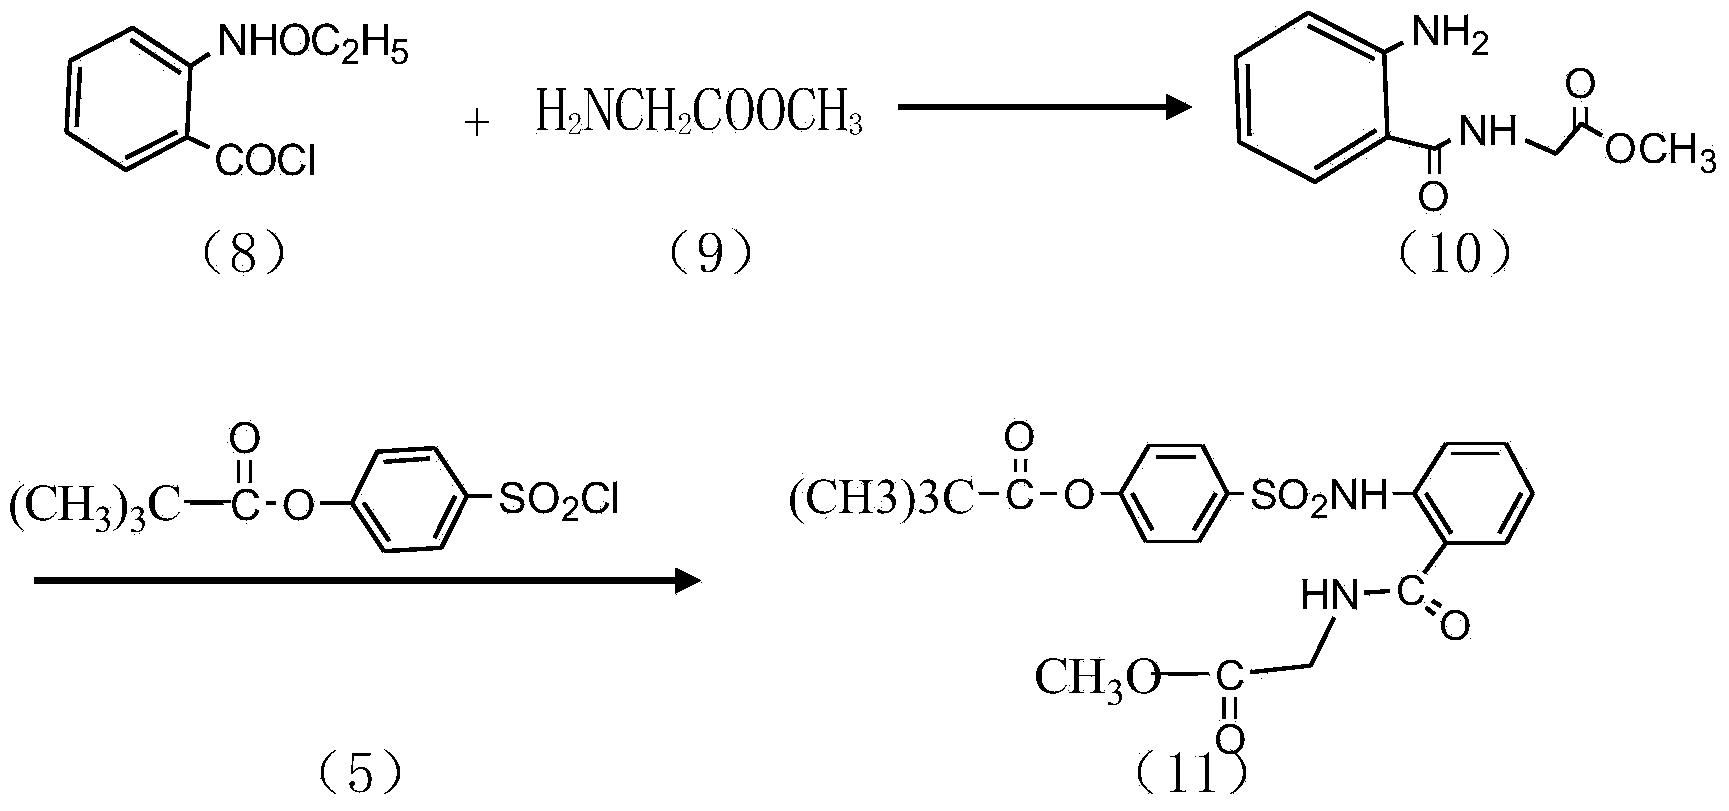 Preparation method of sivelestat sodium hydrate intermediate